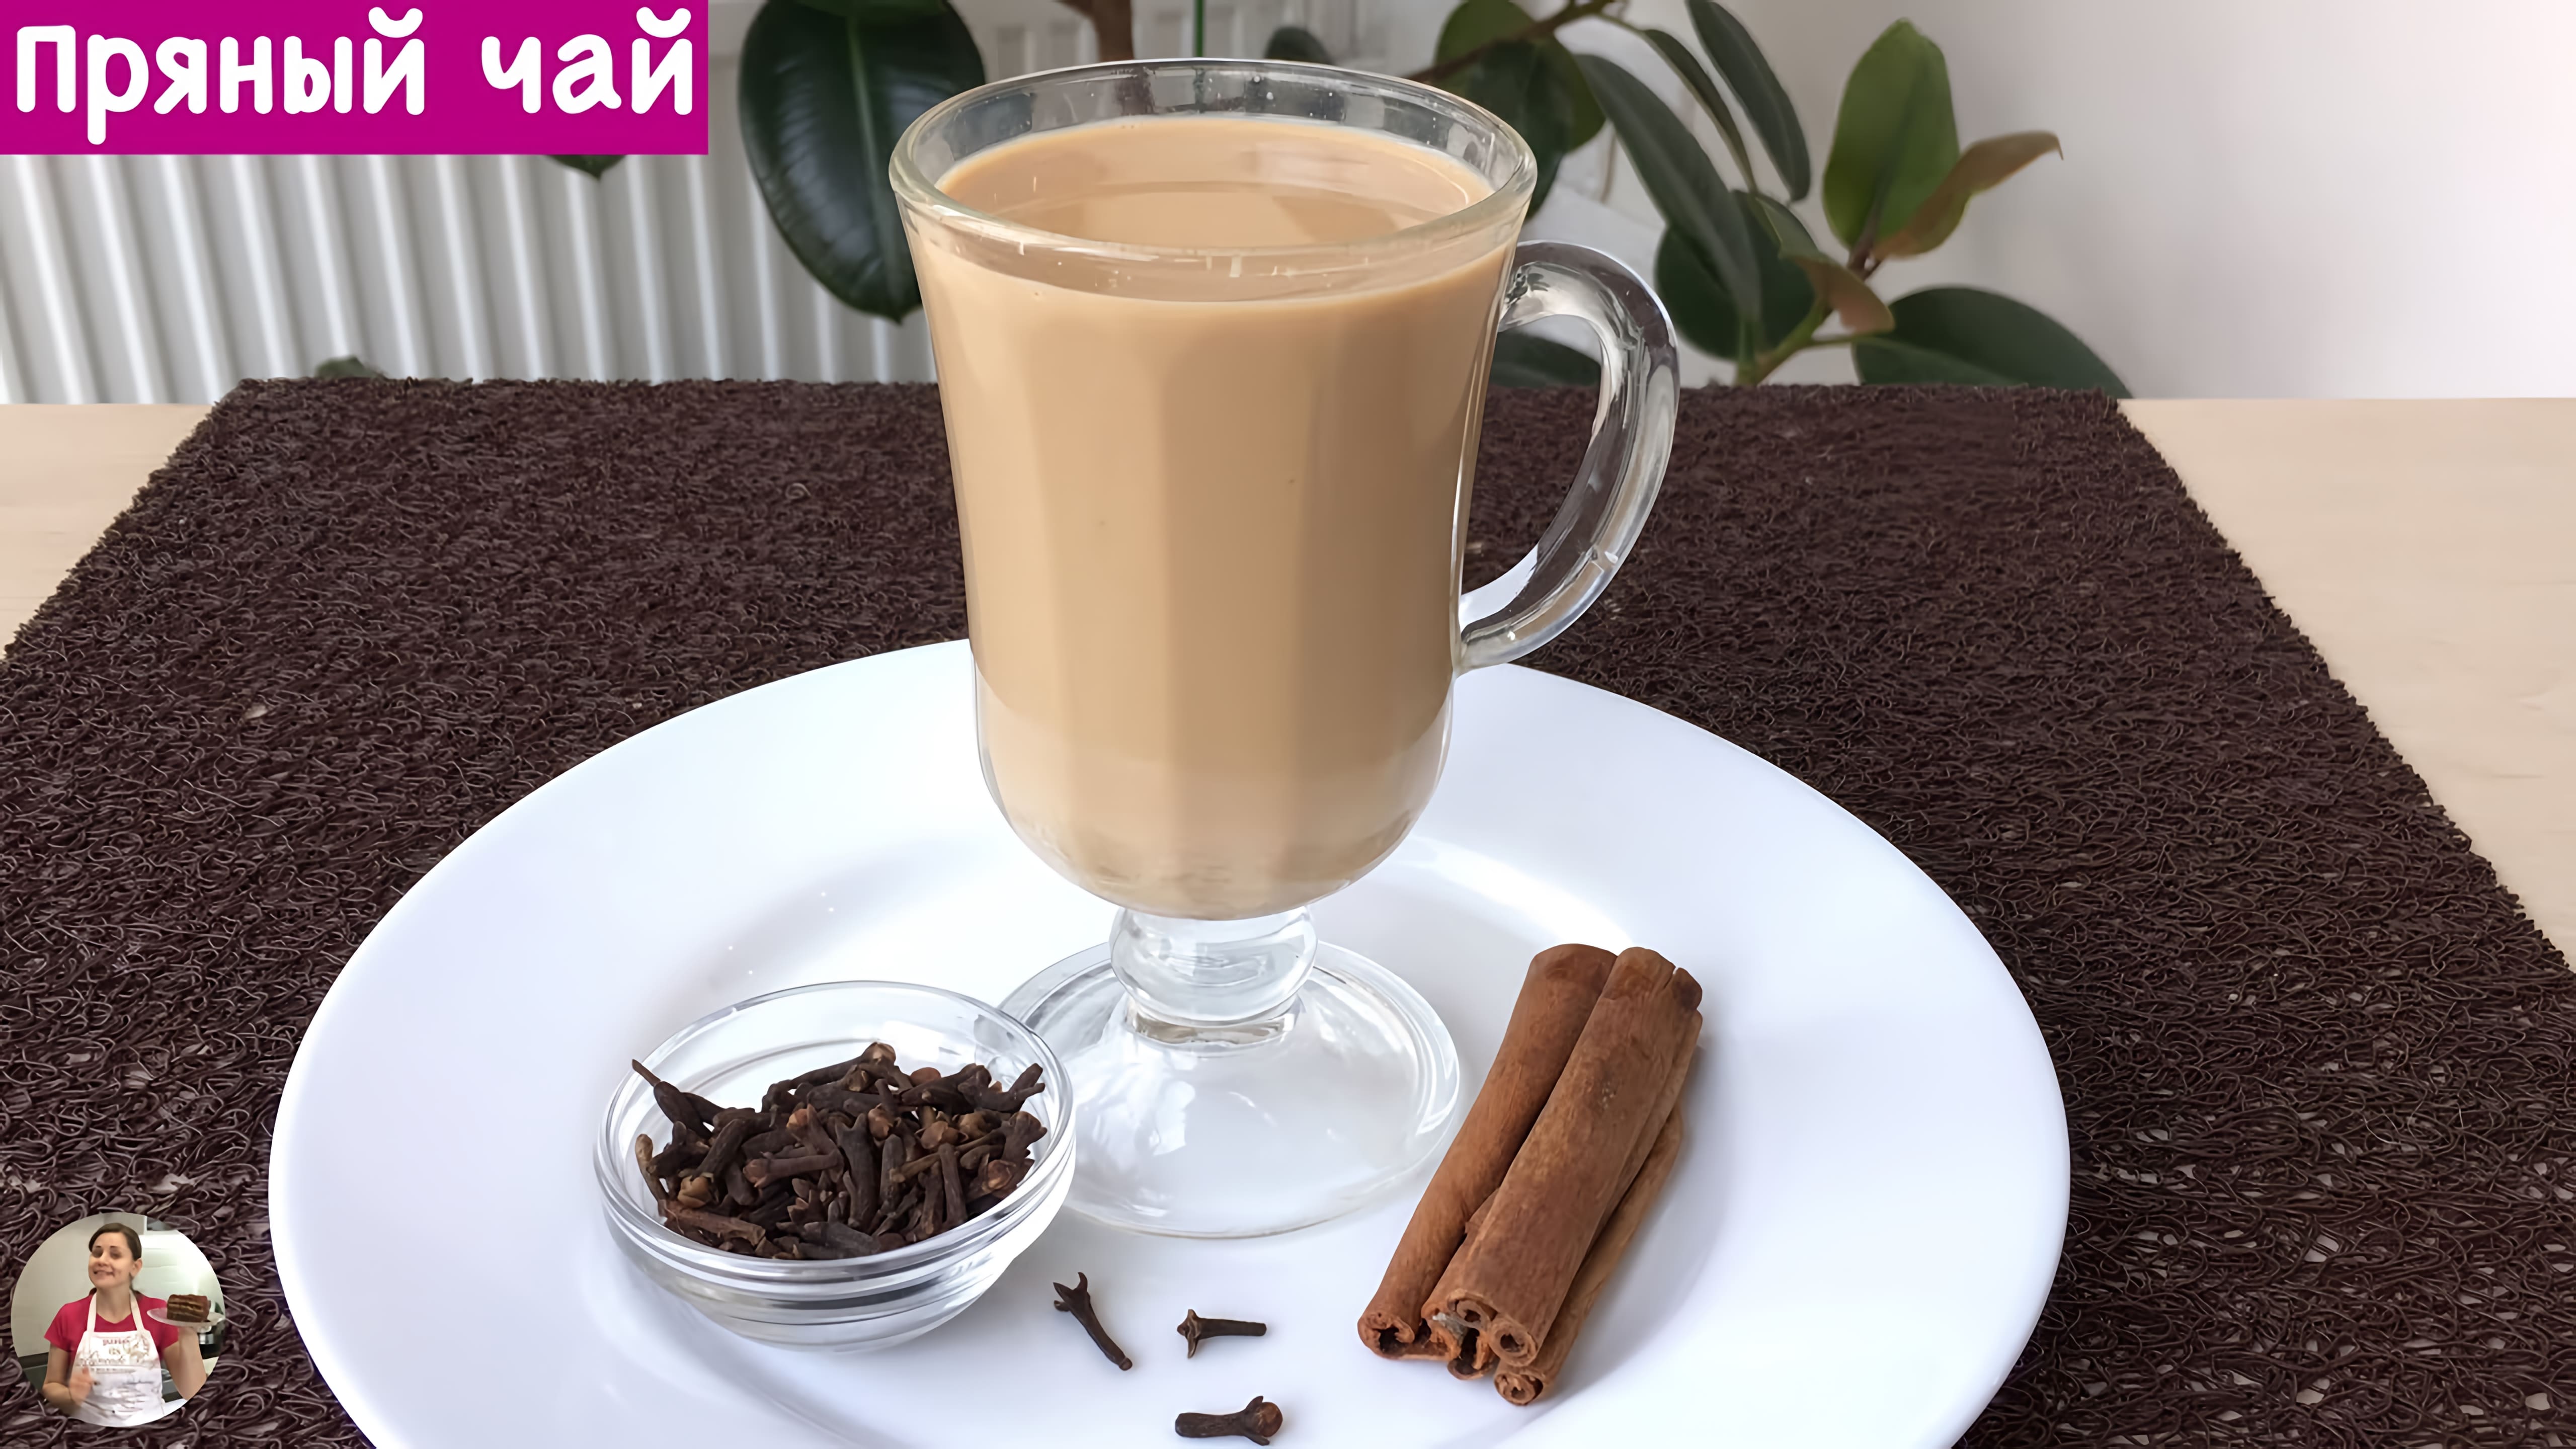 Видео: Пряный Чай  (Spiced Tea Recipe)